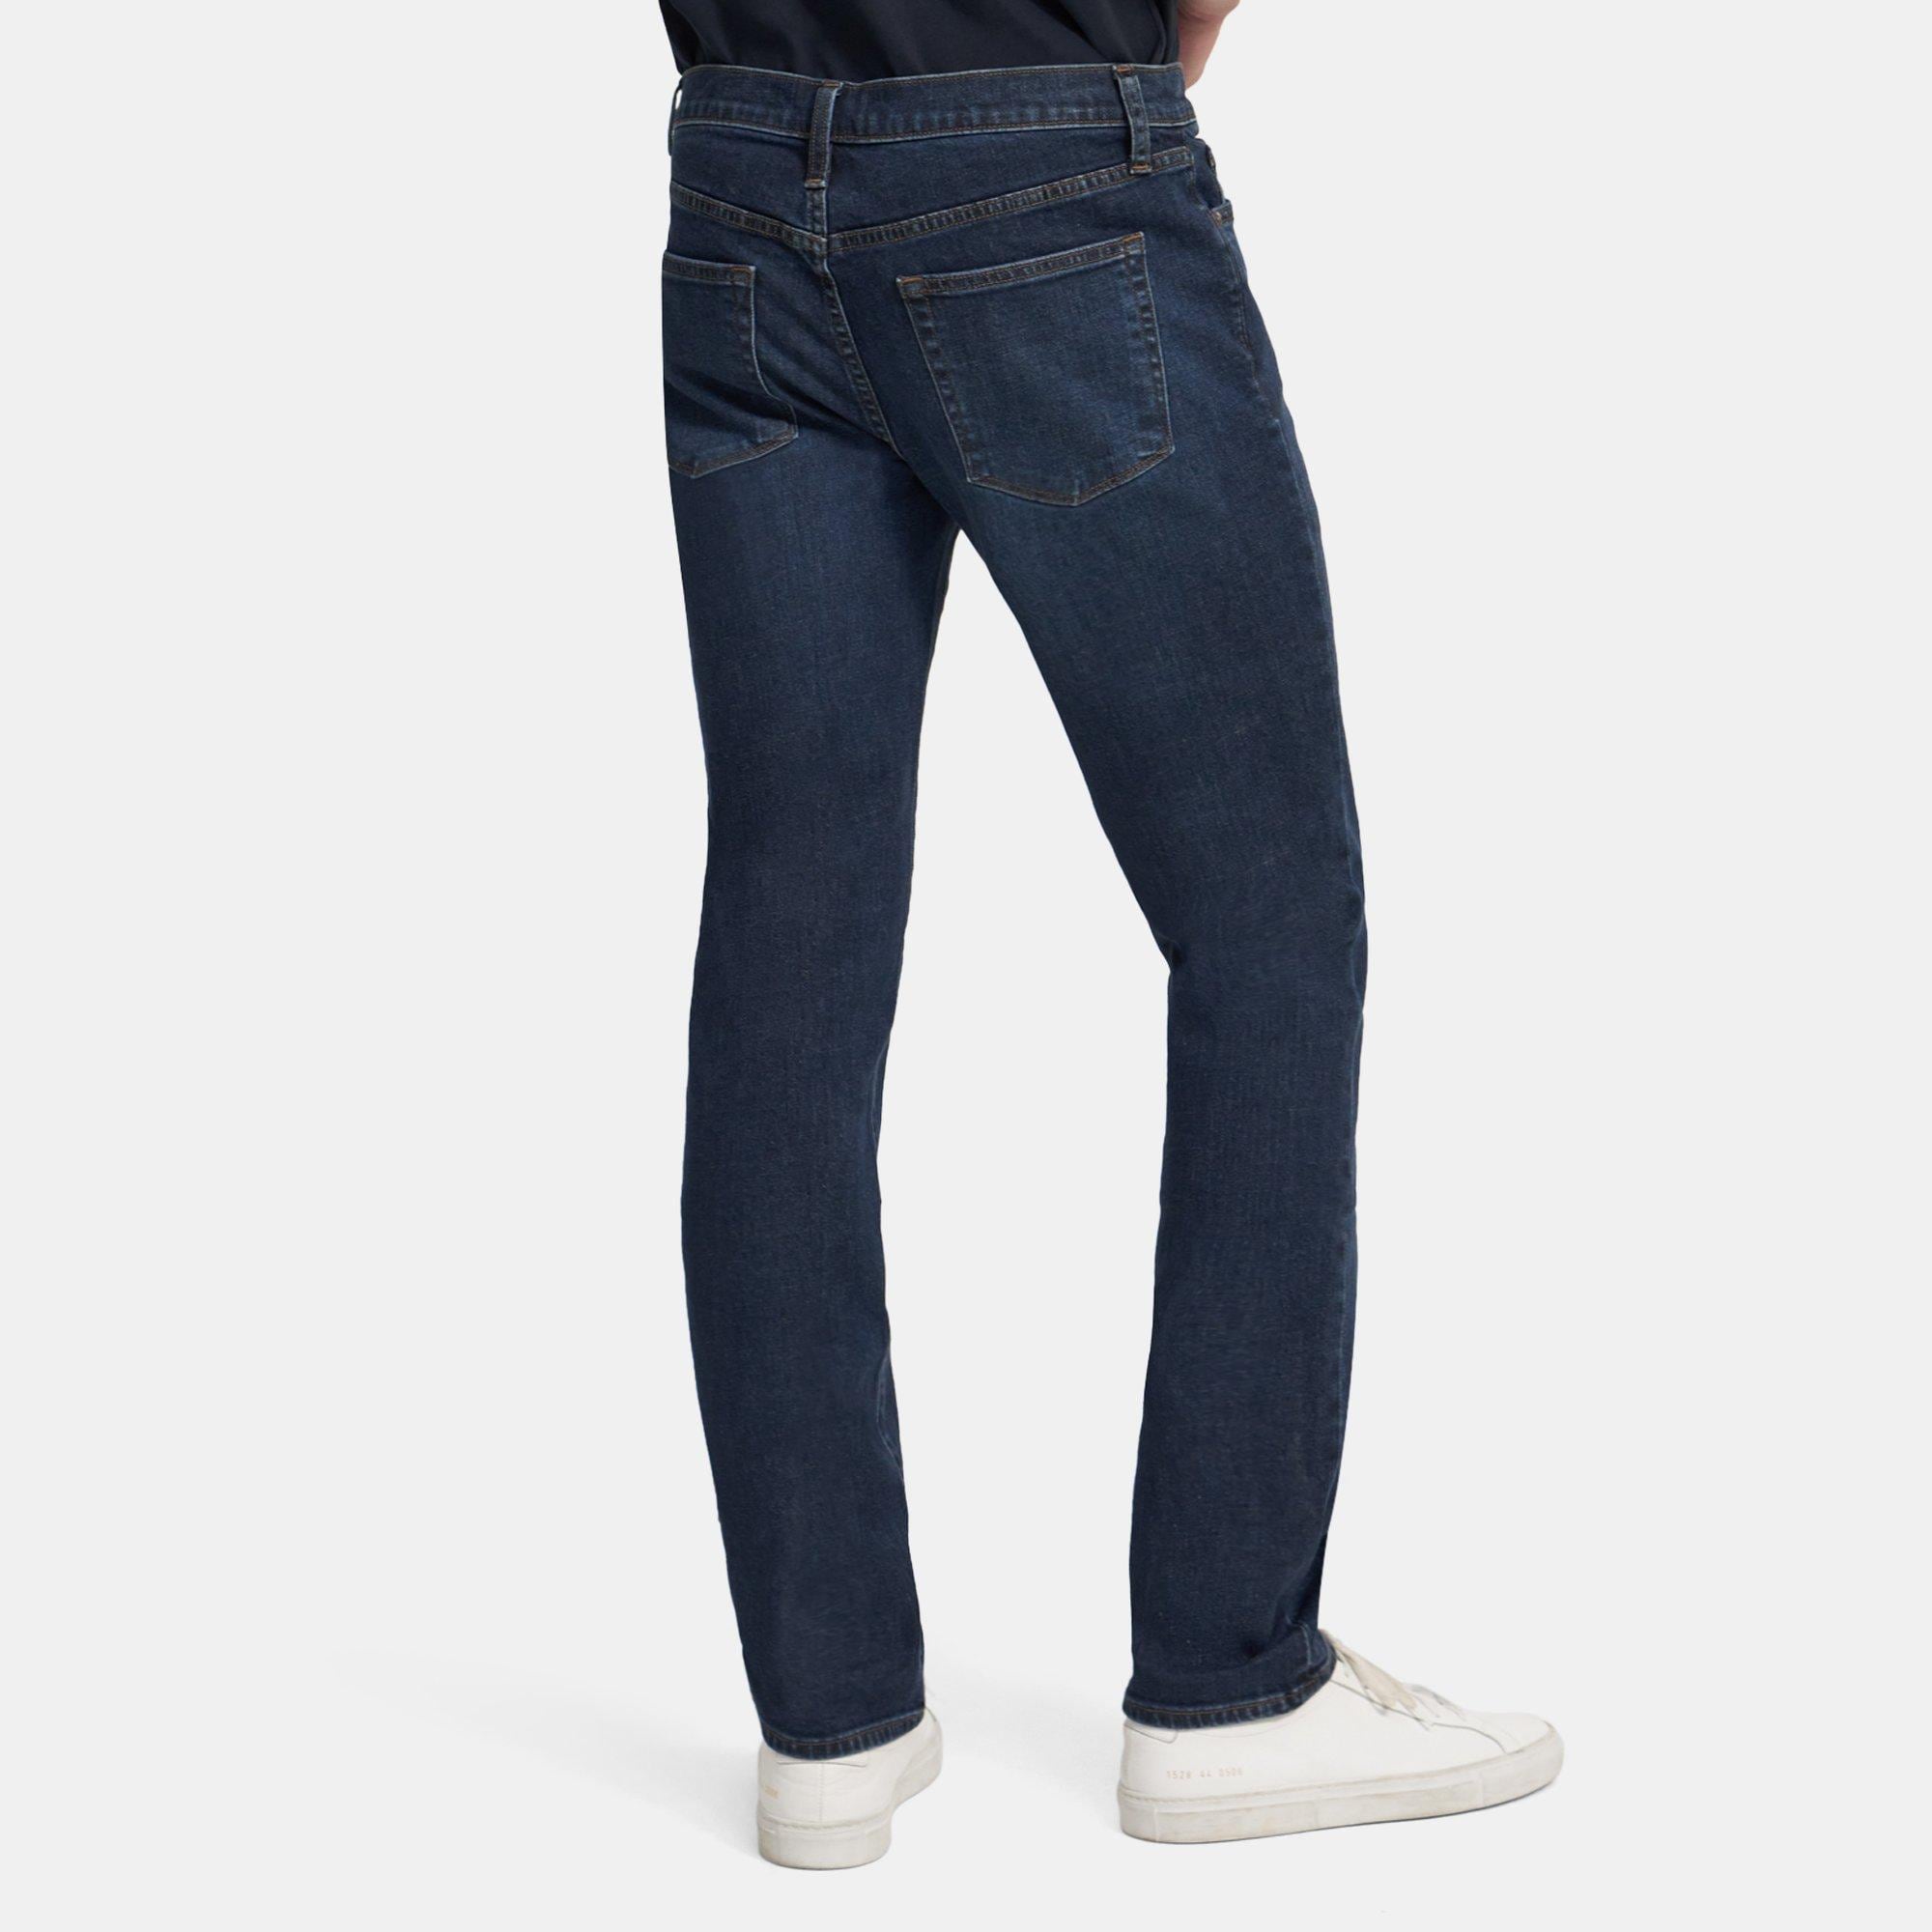 J Brand Jeans Men's Kane Straight 5 Pocket Fit, Kabru, 28 